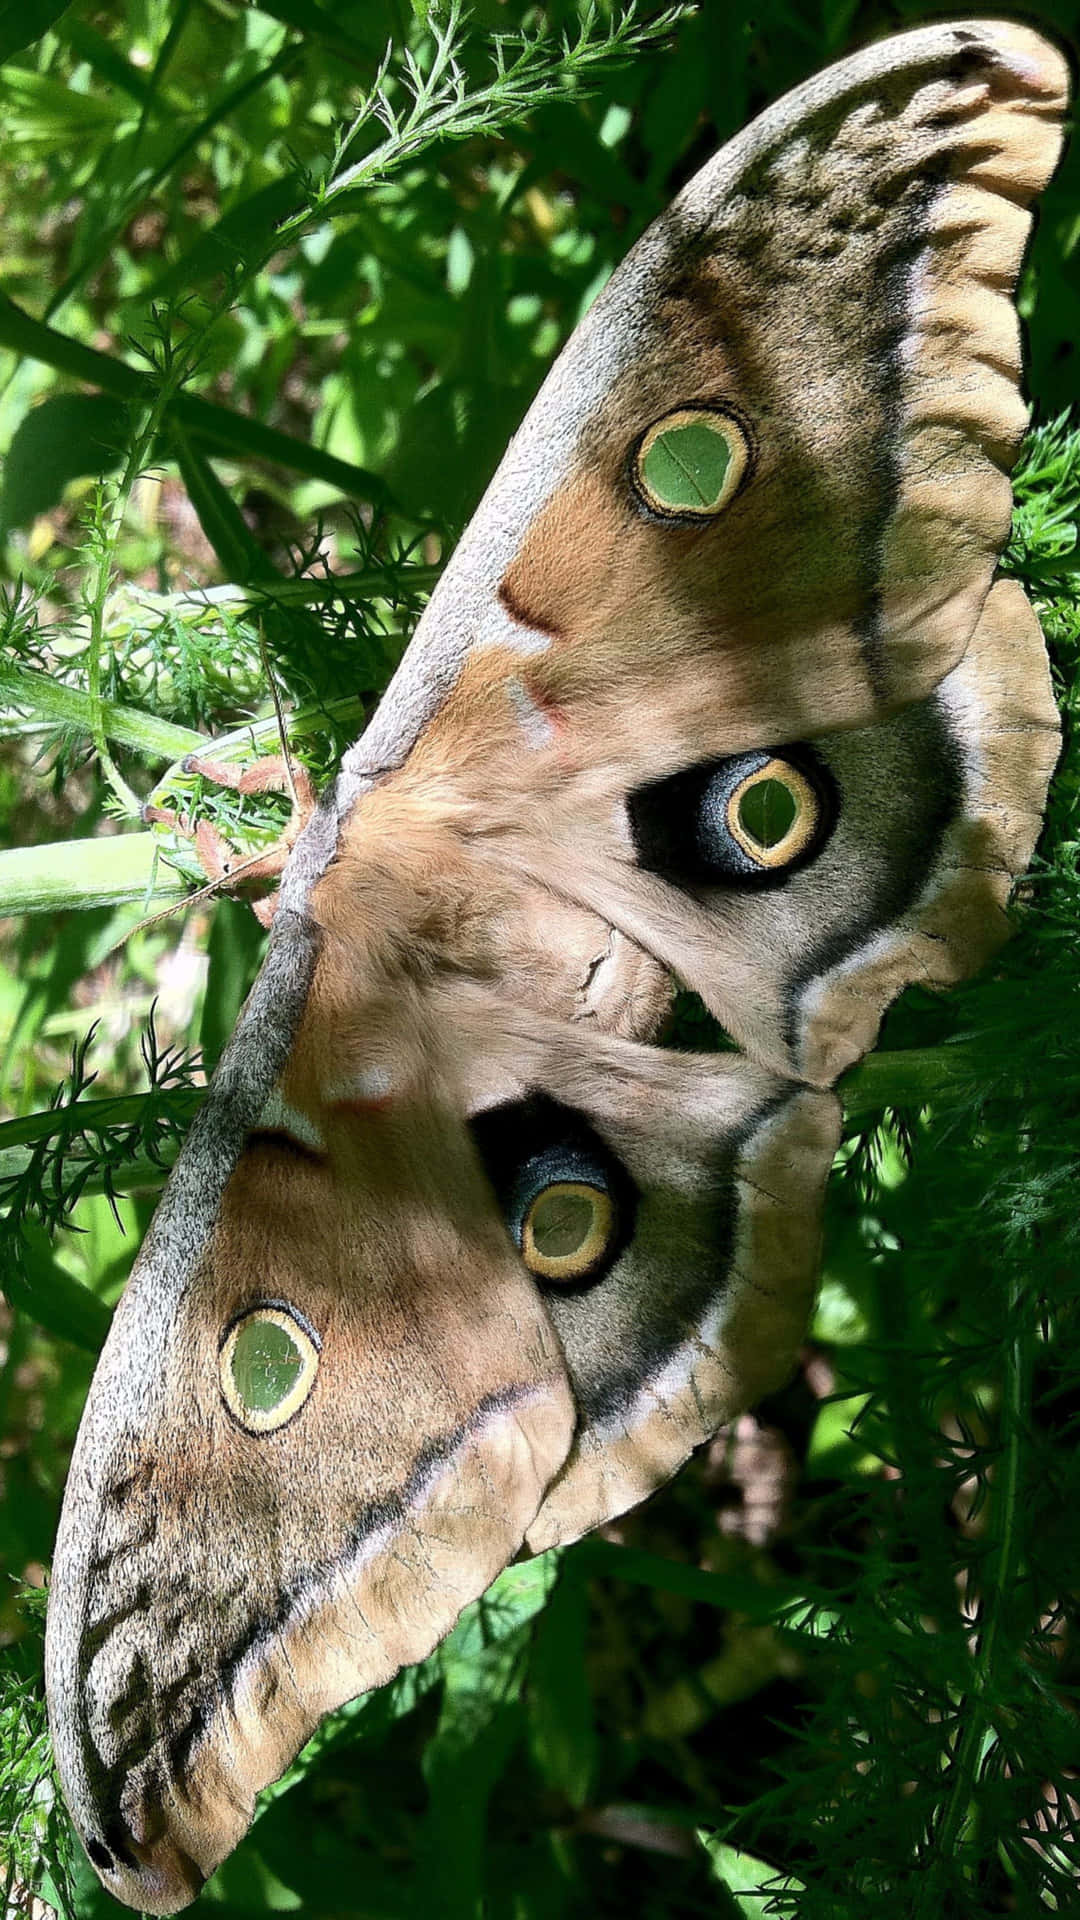 Promethea Moth Camouflage Greenery Wallpaper